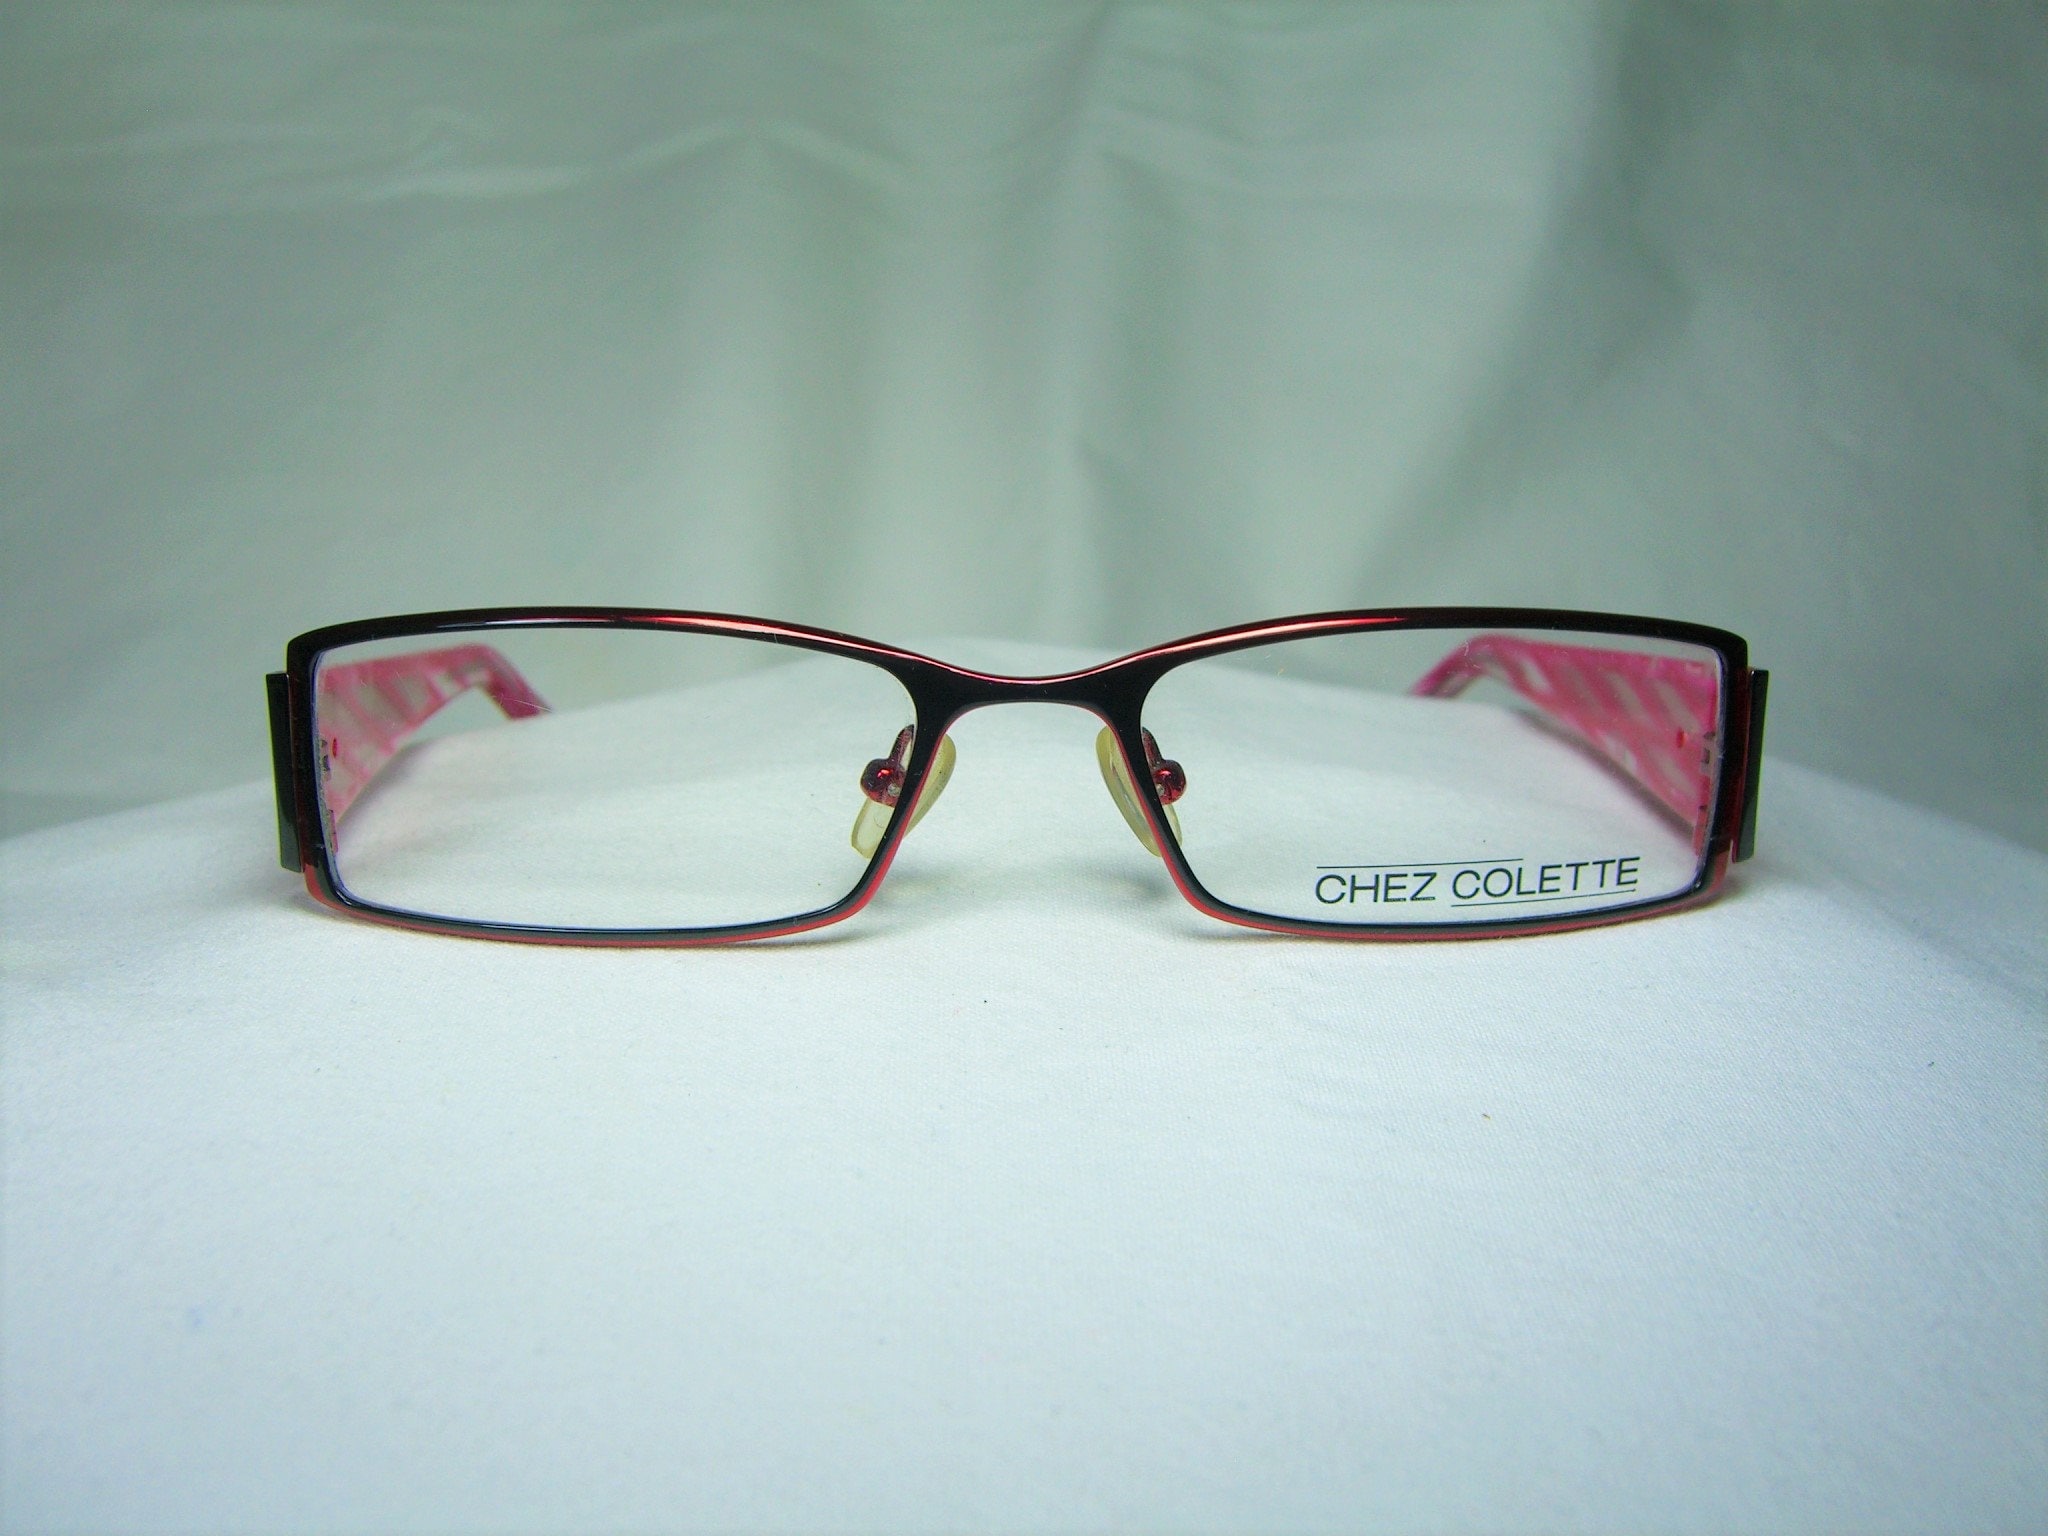 Chez Colette Eyeglasses Oval Square Frames Women's 